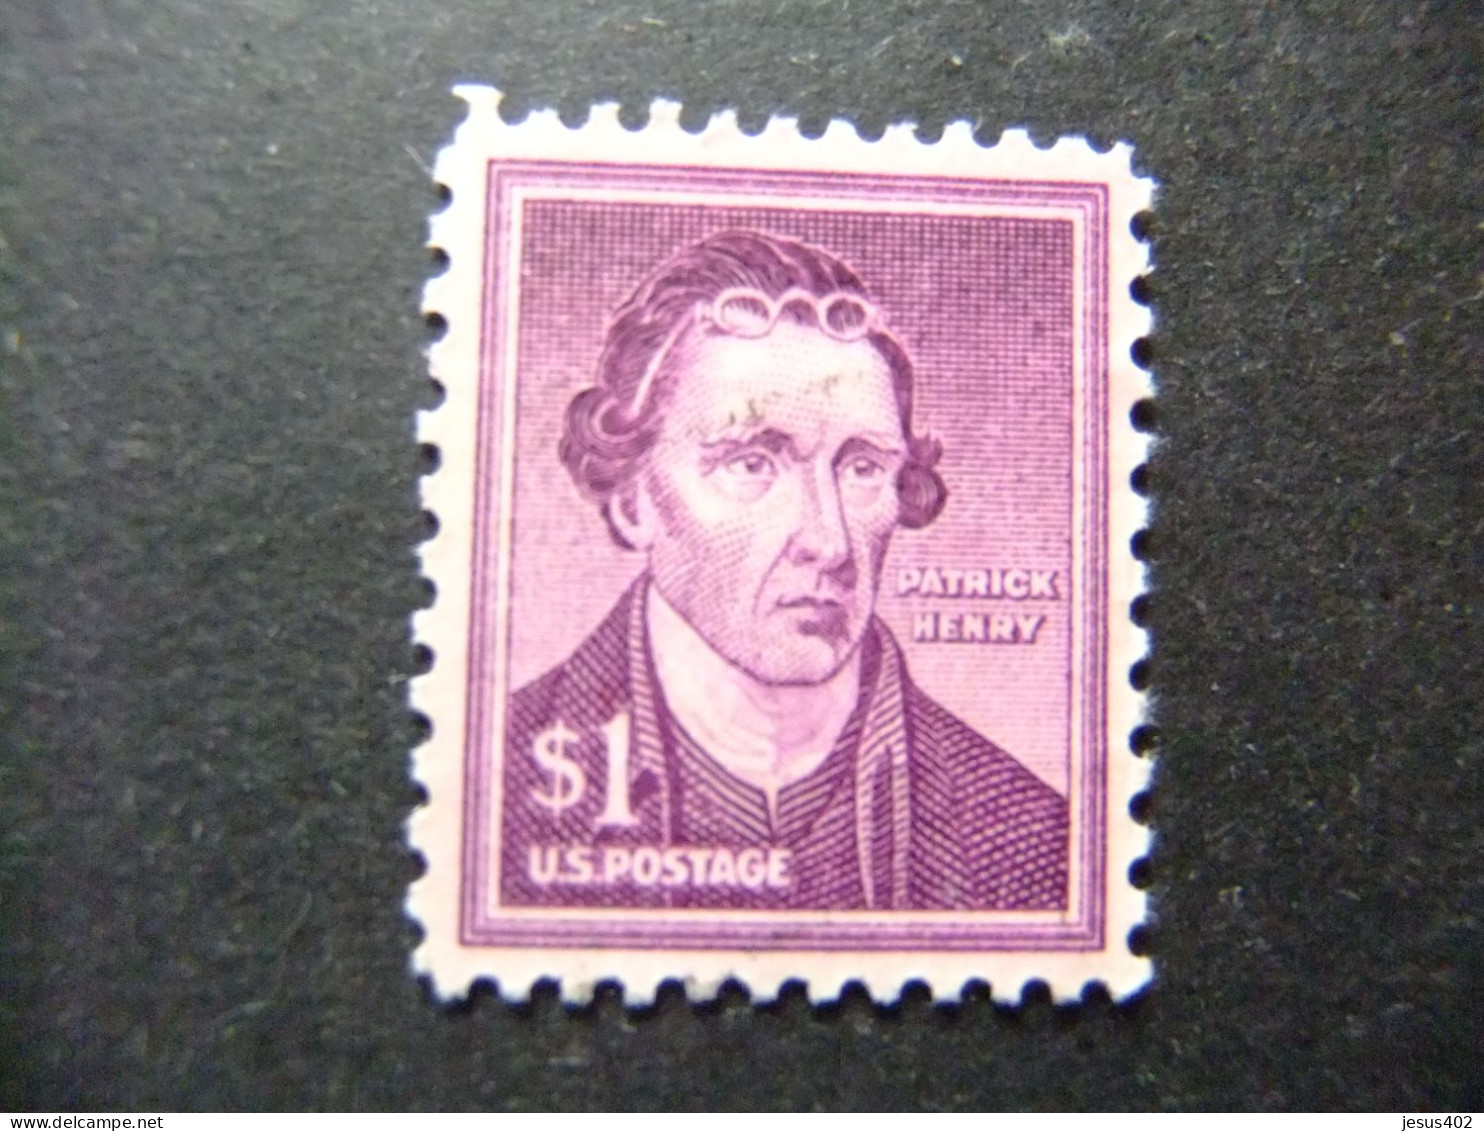 ESTADOS UNIDOS / ETATS-UNIS D'AMERIQUE 1955 / PATRICK HENRY YVERT 605 (*) Sin Goma - Unused Stamps